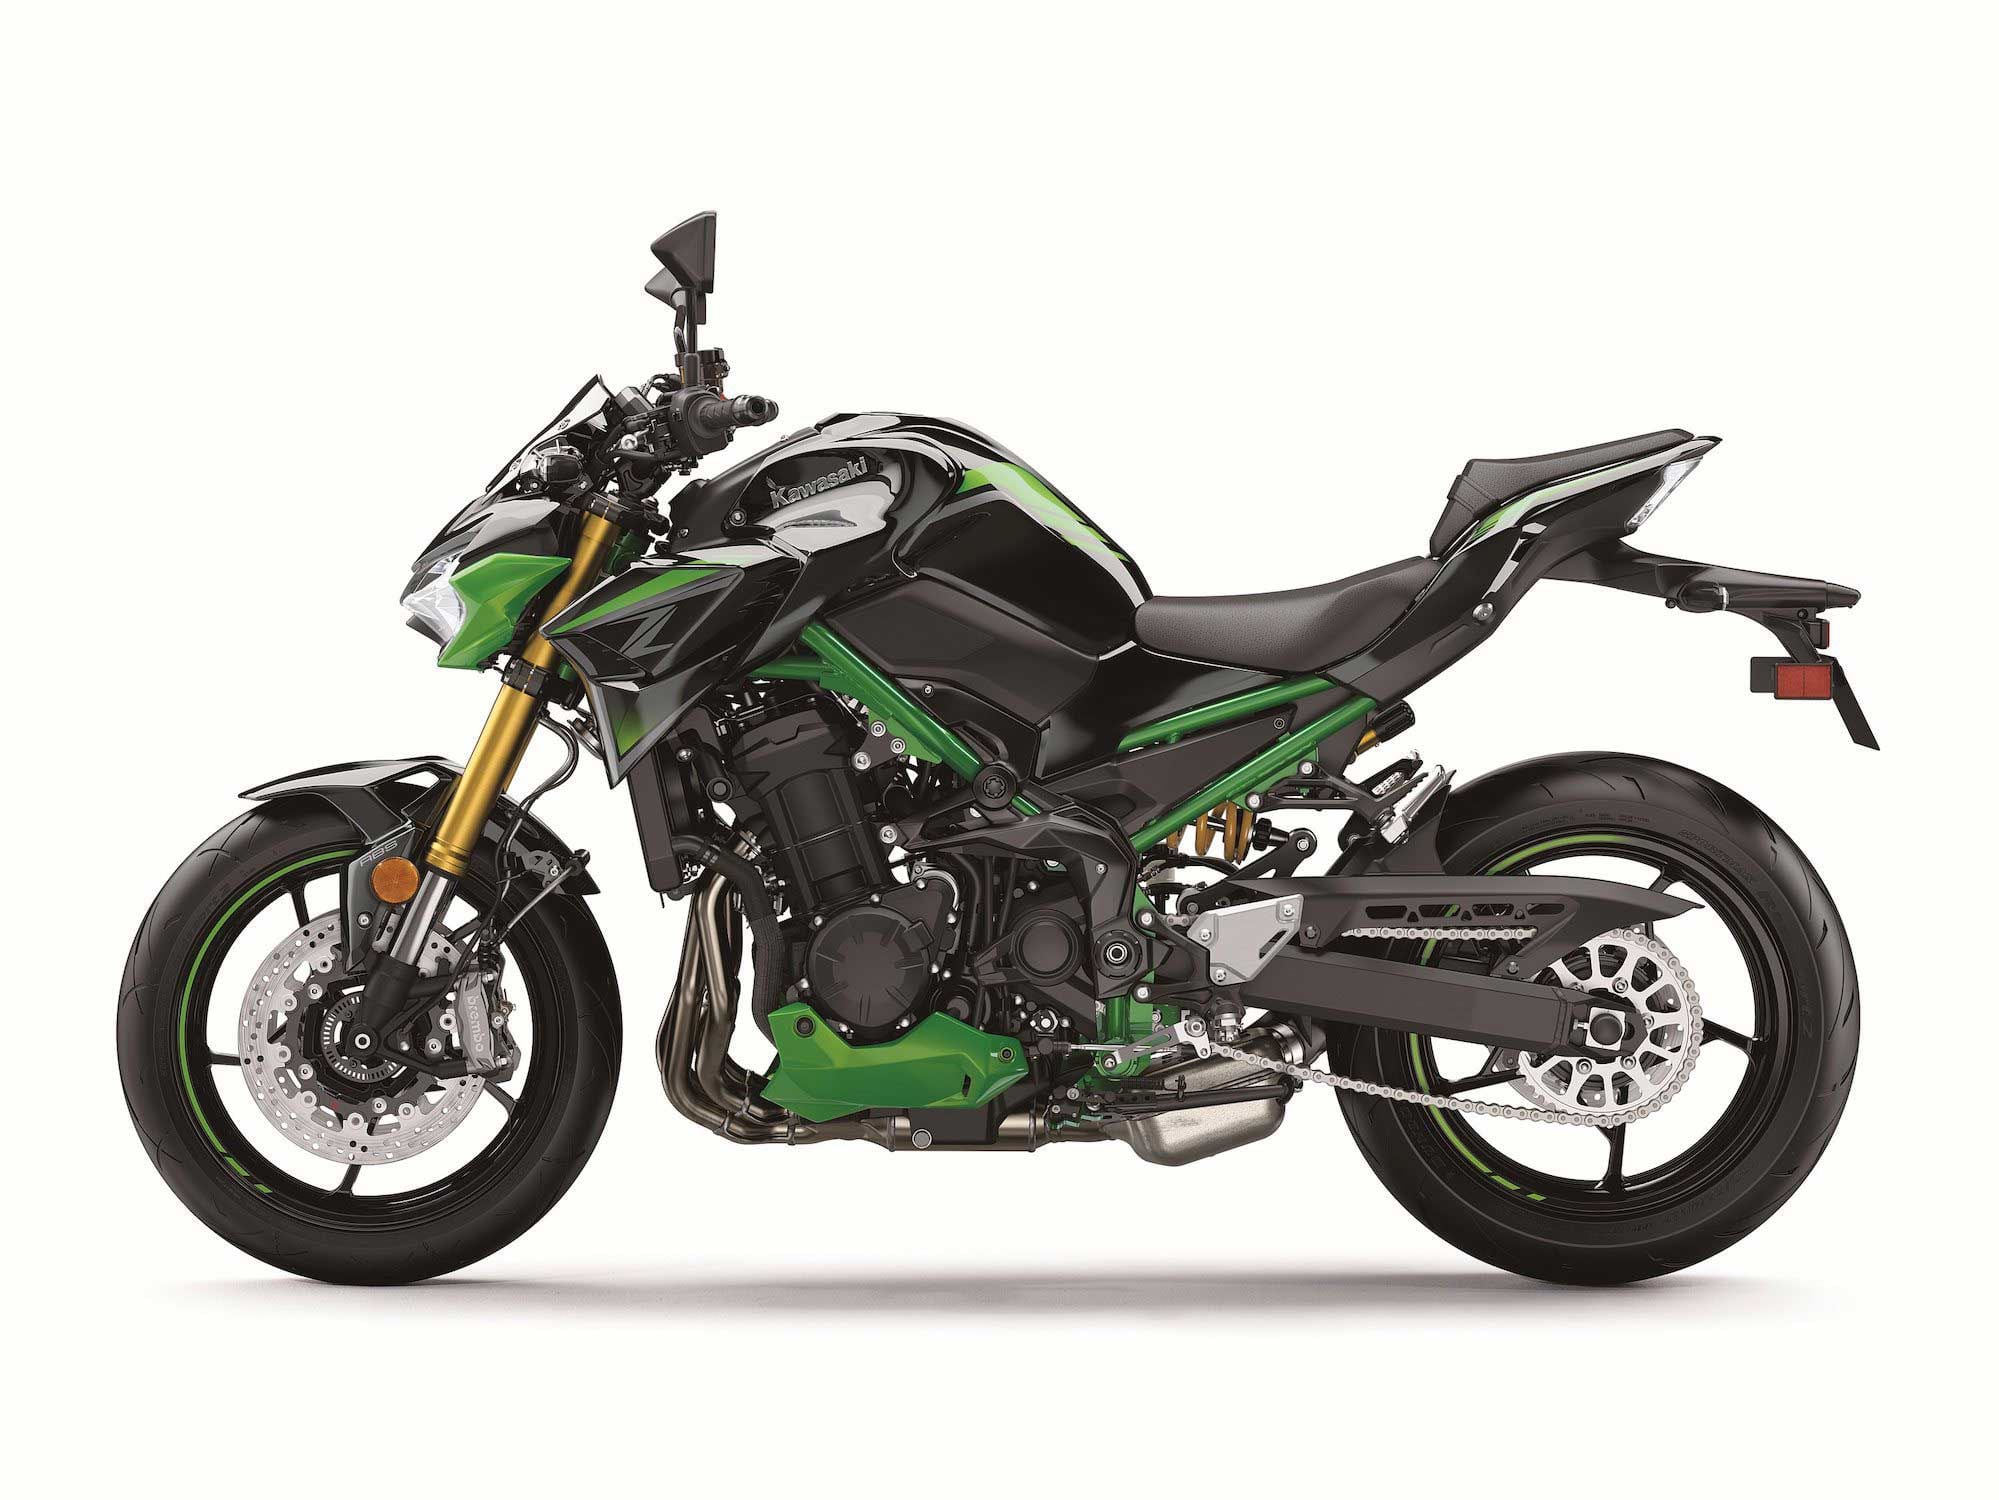 2022 Kawasaki Z900 First Look | Cycle World